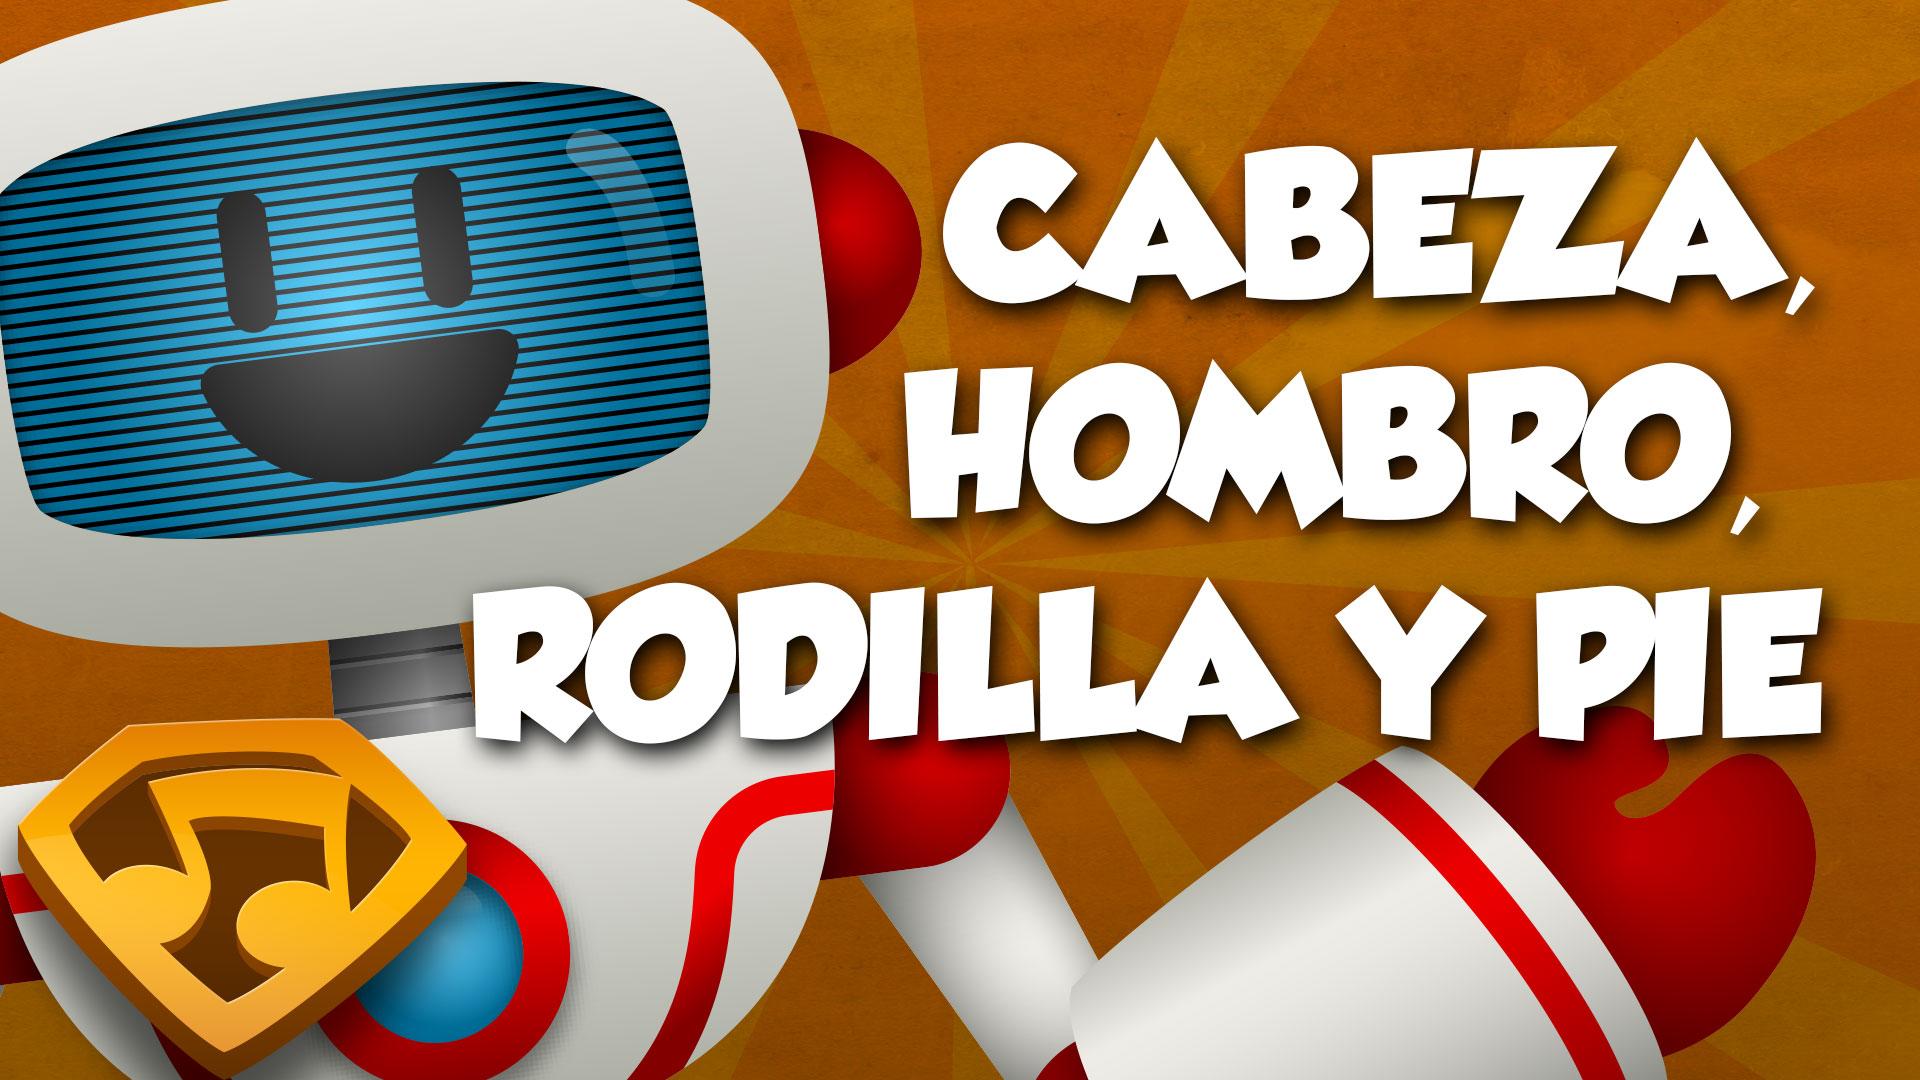 Cabeza, Hombro, Rodilla y Pie (Versión Con Letras) video thumbnail. Click to watch the video.